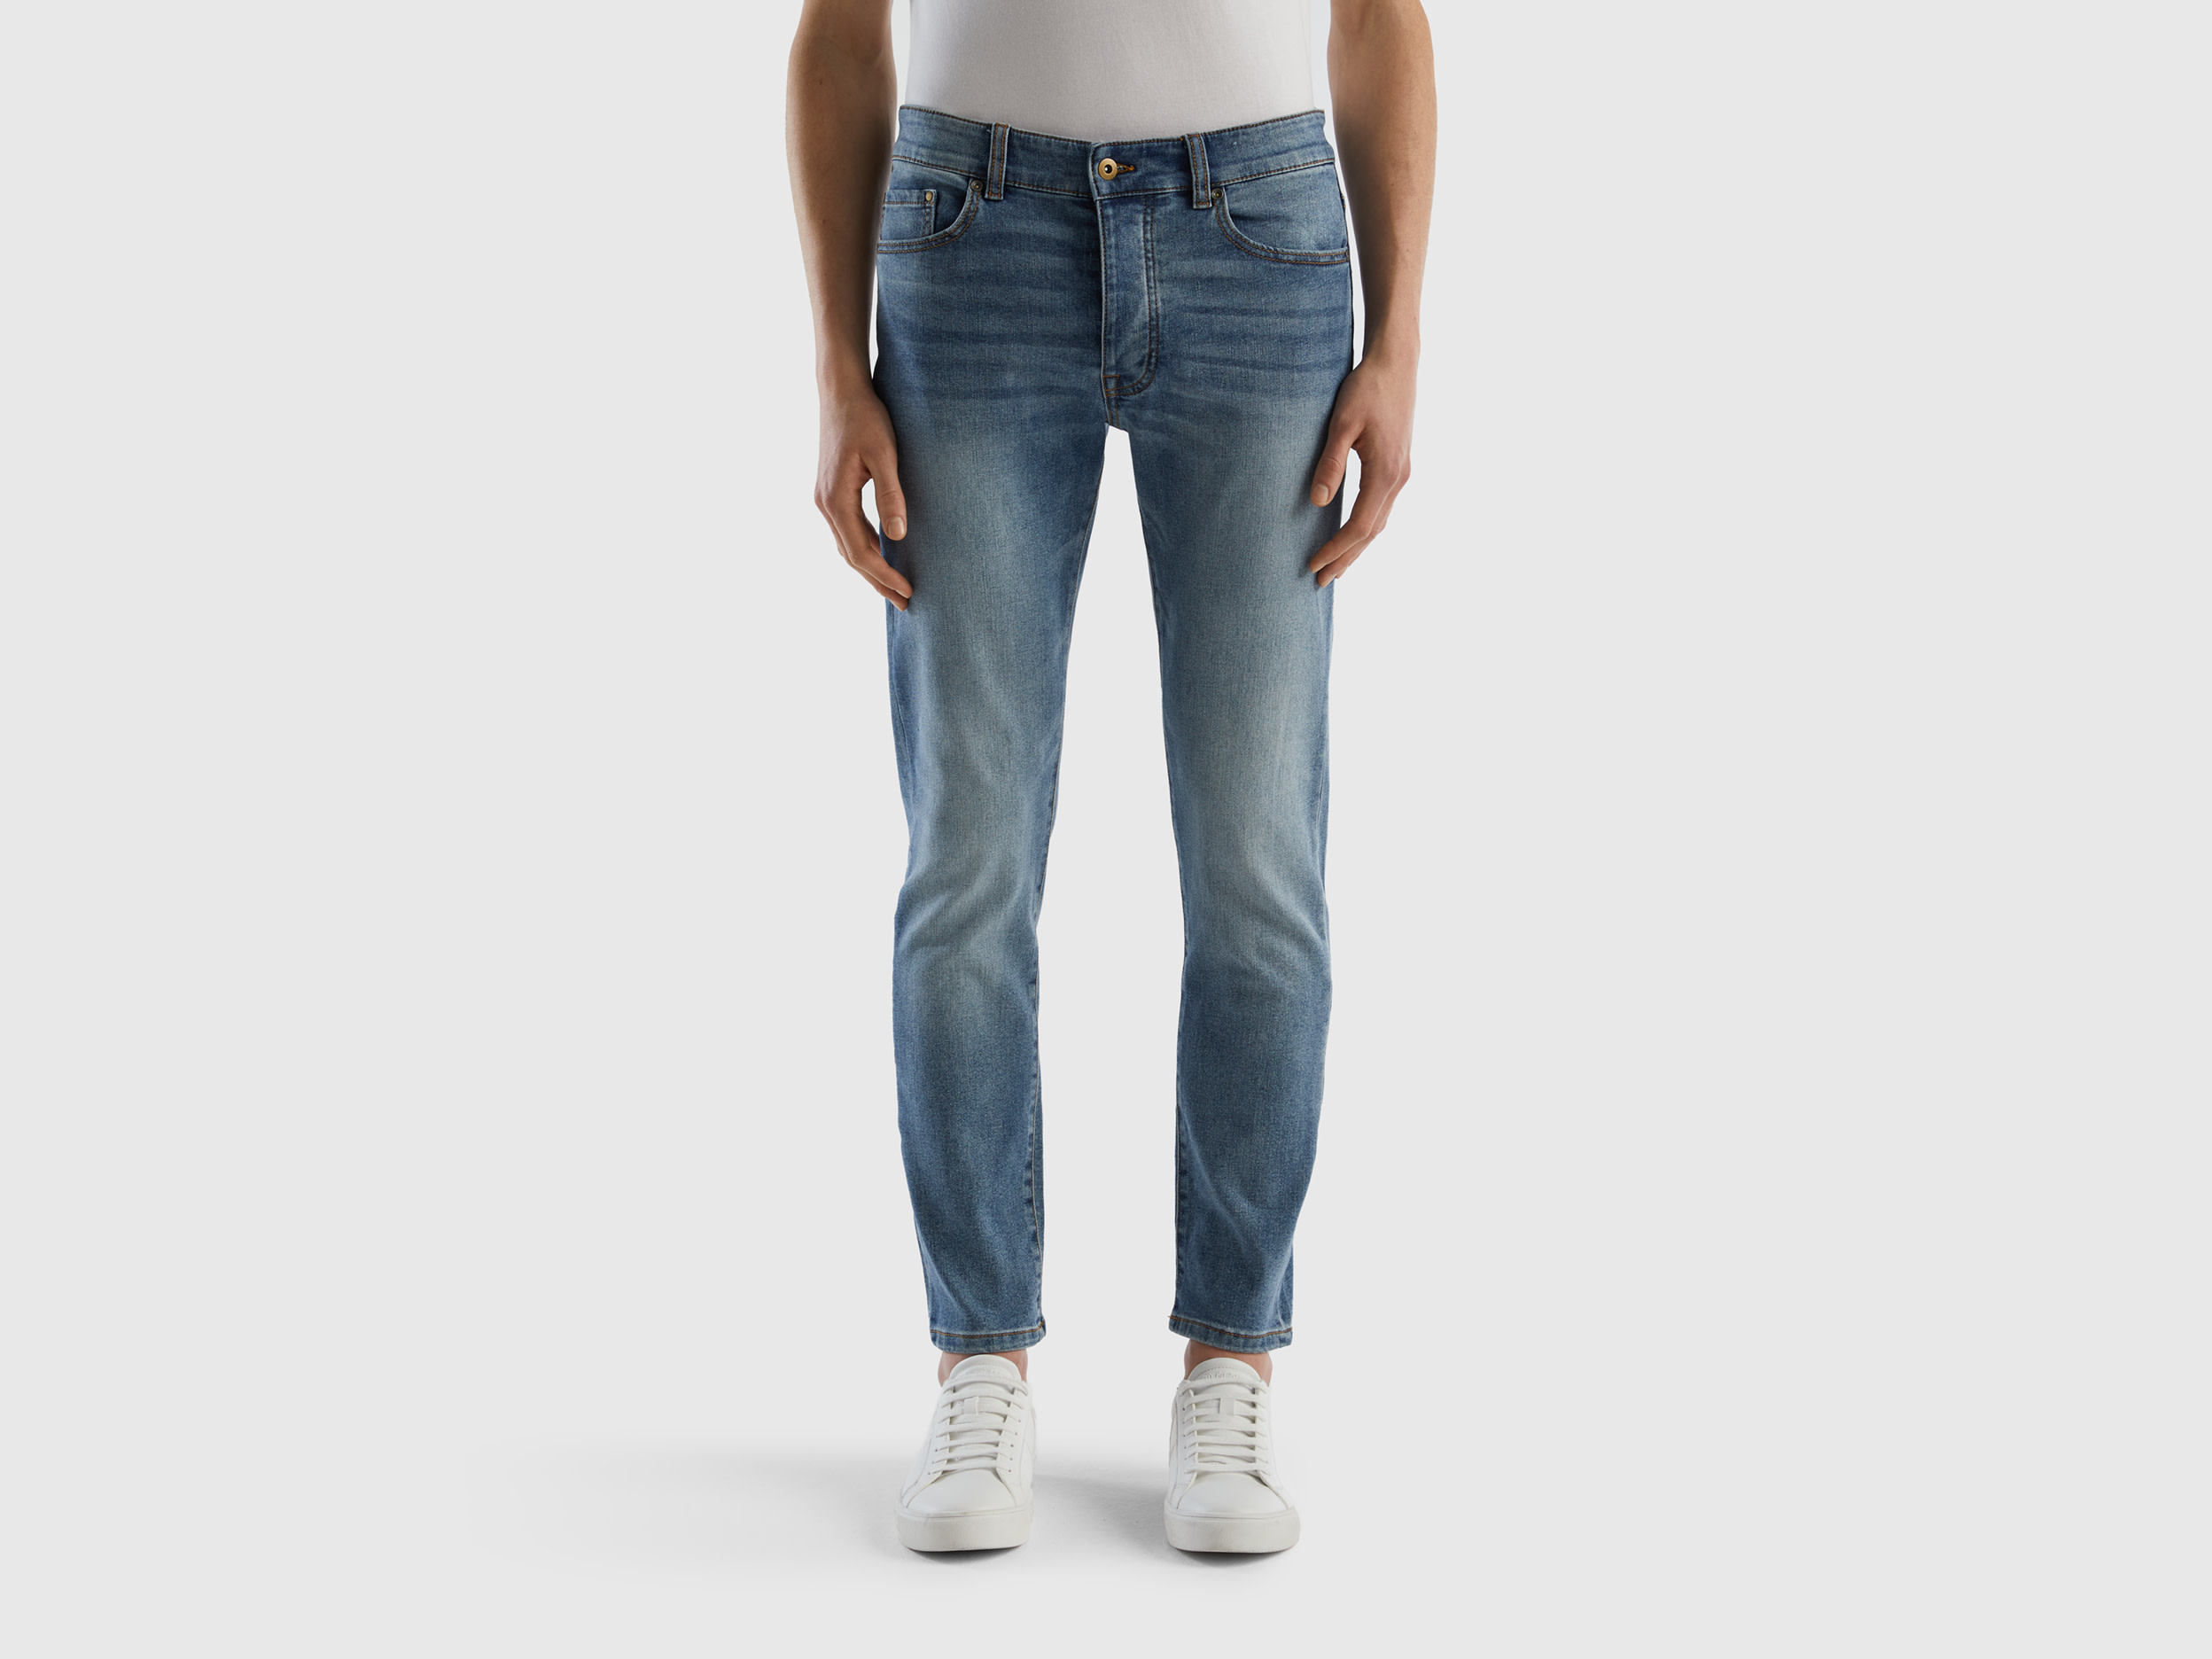 Benetton, Five Pocket Slim Fit Jeans, size 30, Light Blue, Men